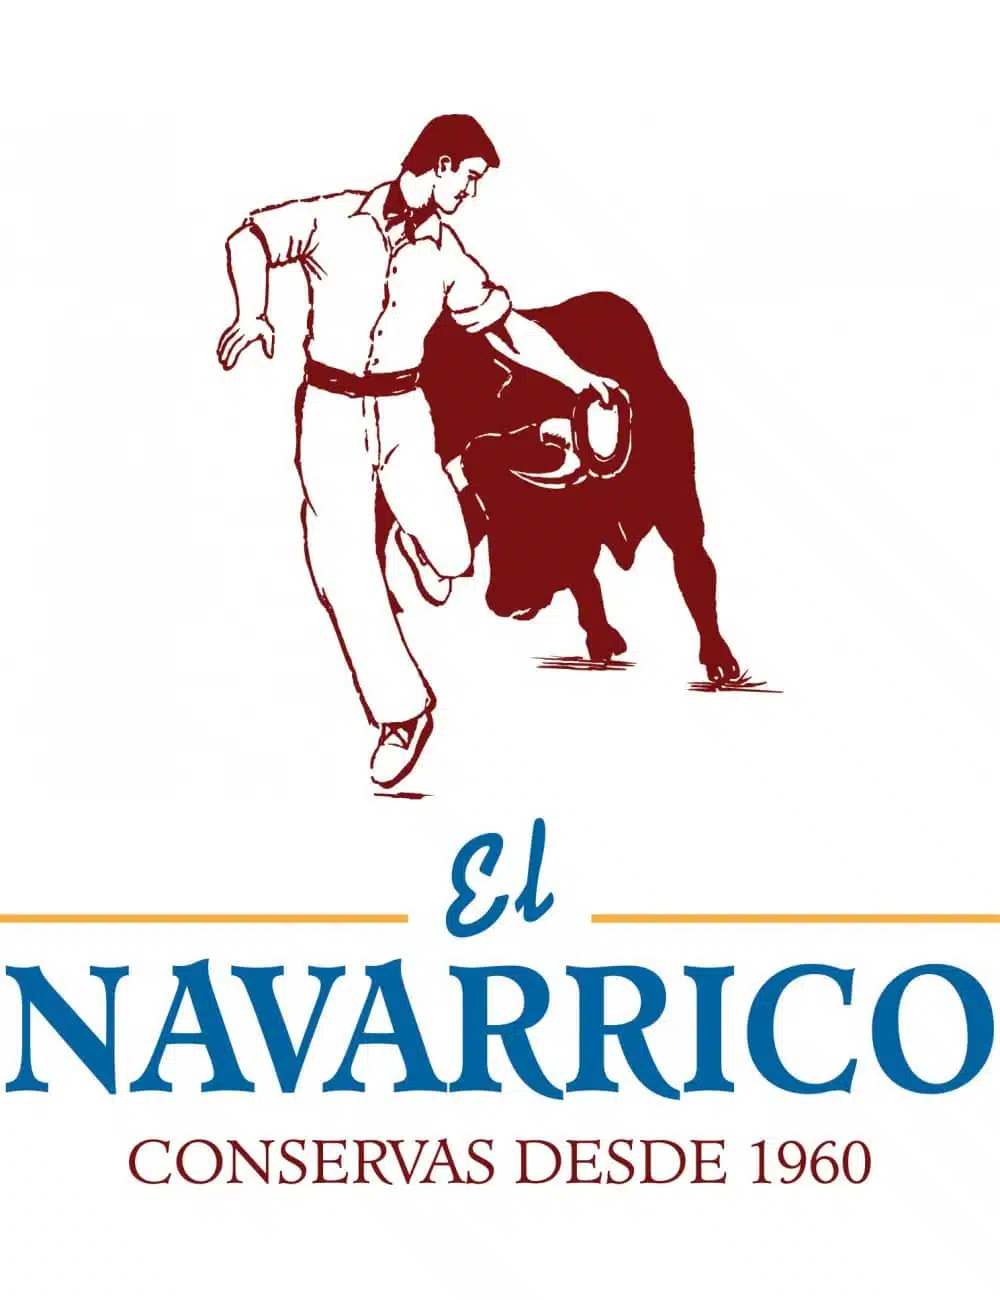 Le Navarrico